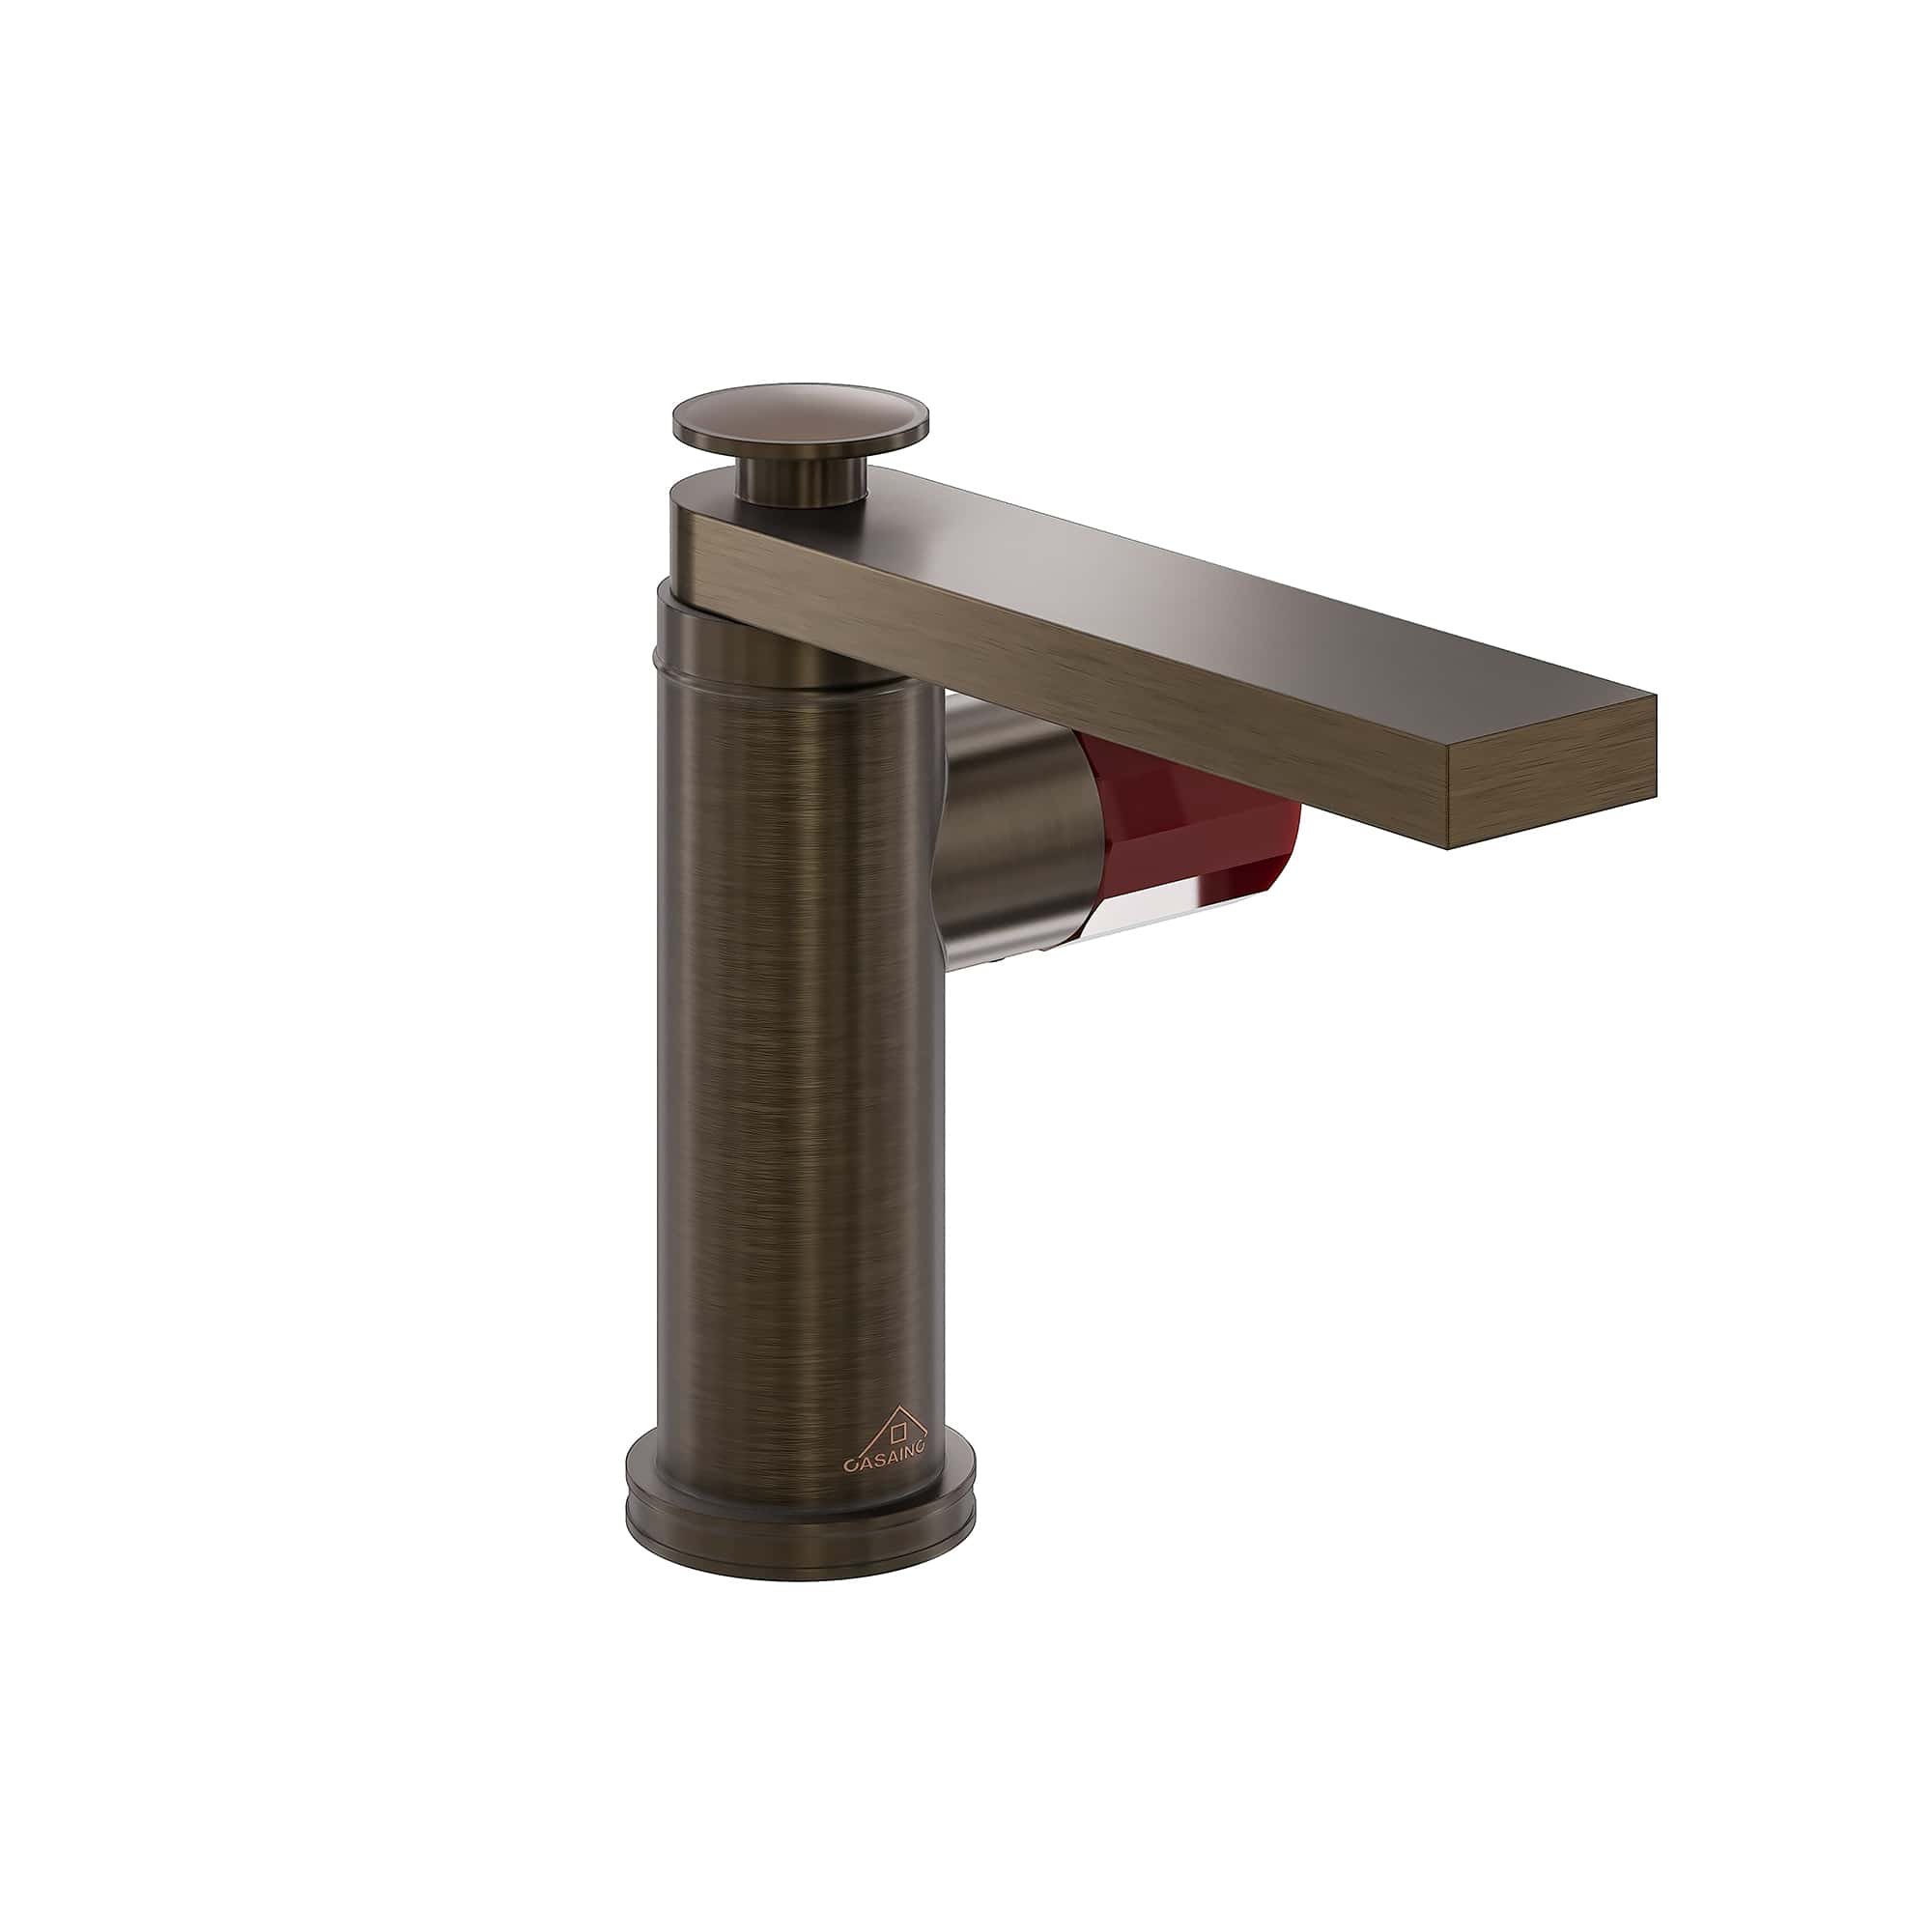 CASAINC 1.2GPM Brown Bronze Single Glazed Handle Basin Faucet with Drain